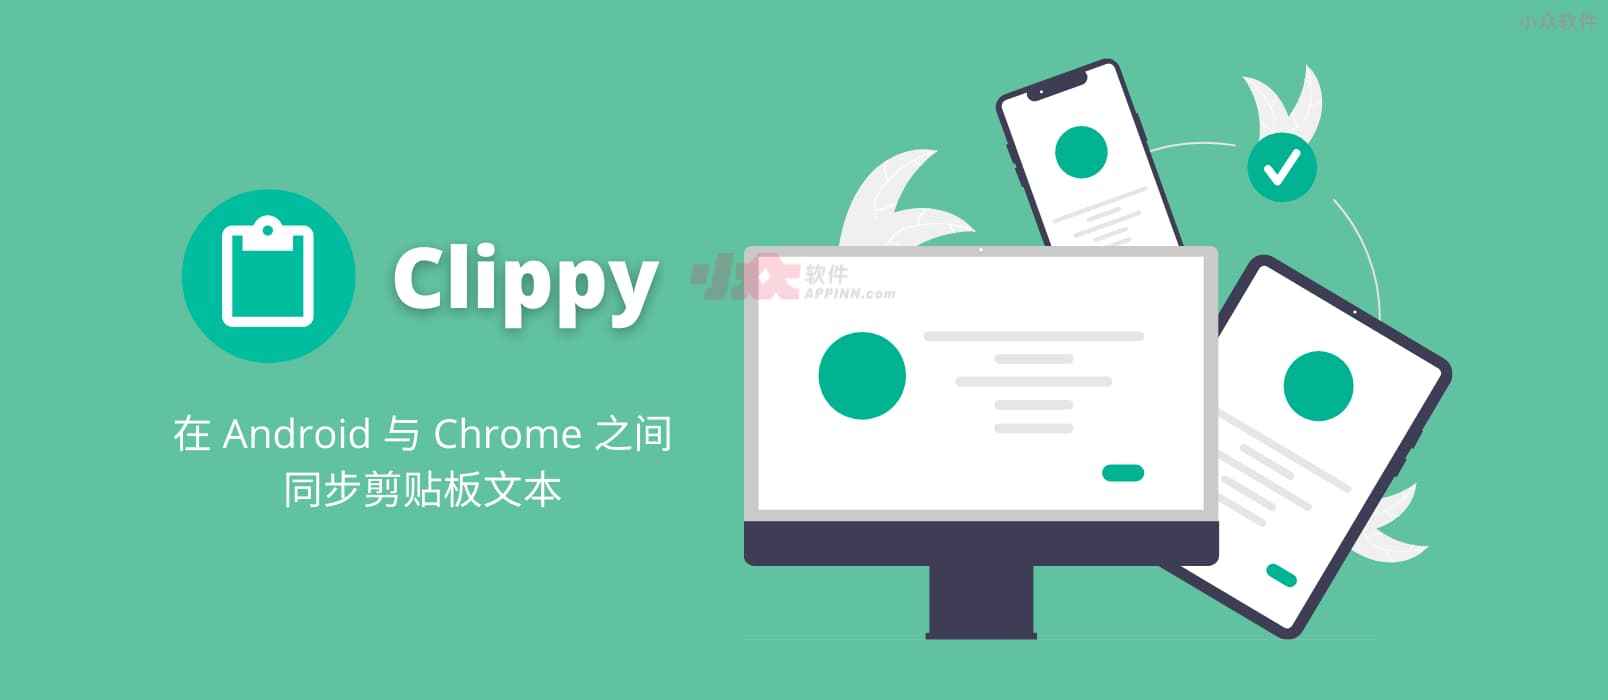 Clippy - 在 Android 与 Chrome 之间，跨设备复制粘贴（同步剪贴板文本）